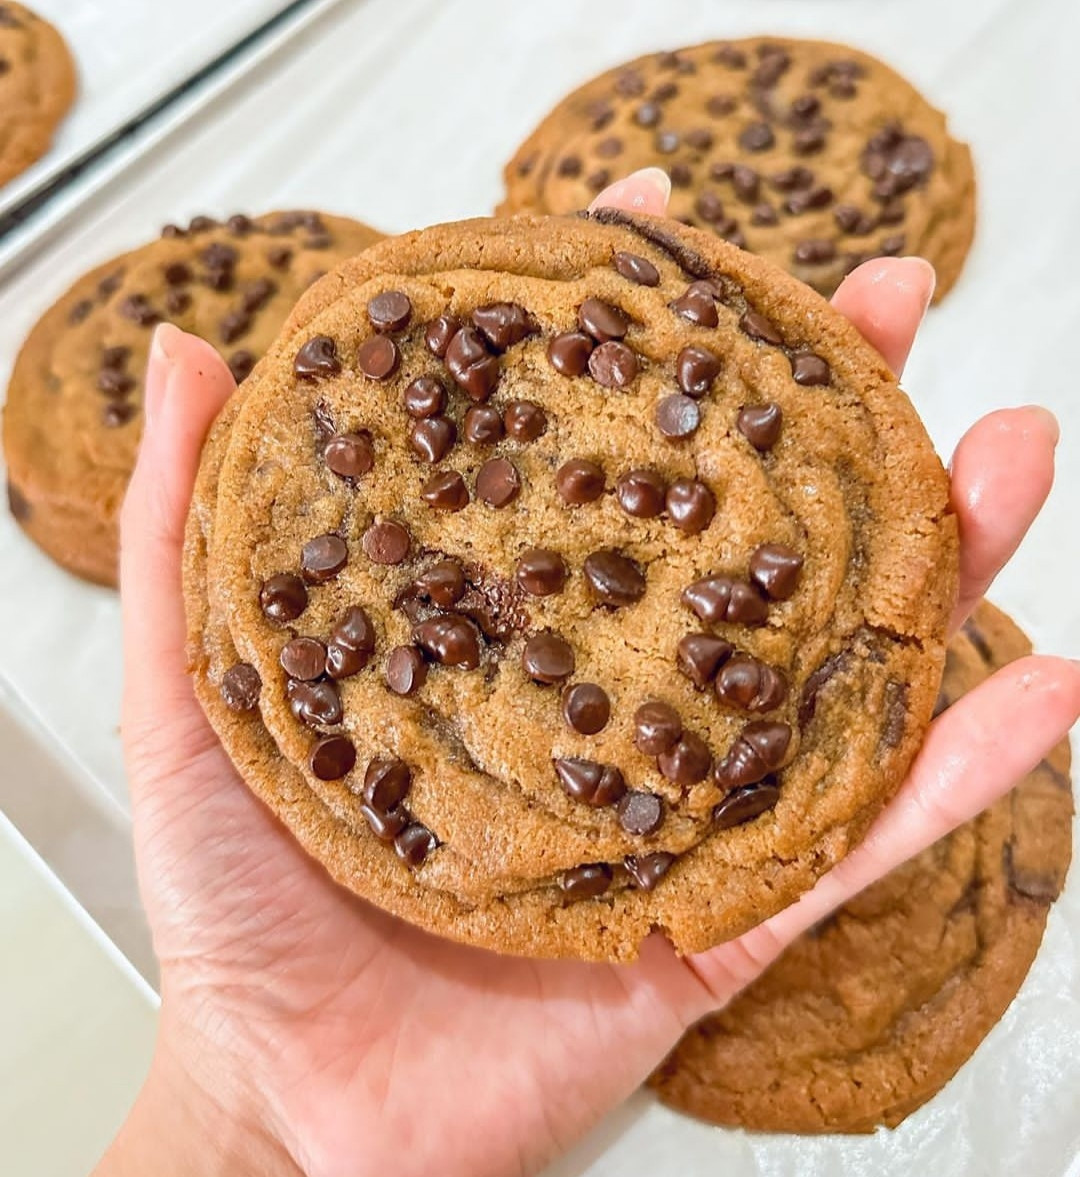 Giant Cookies